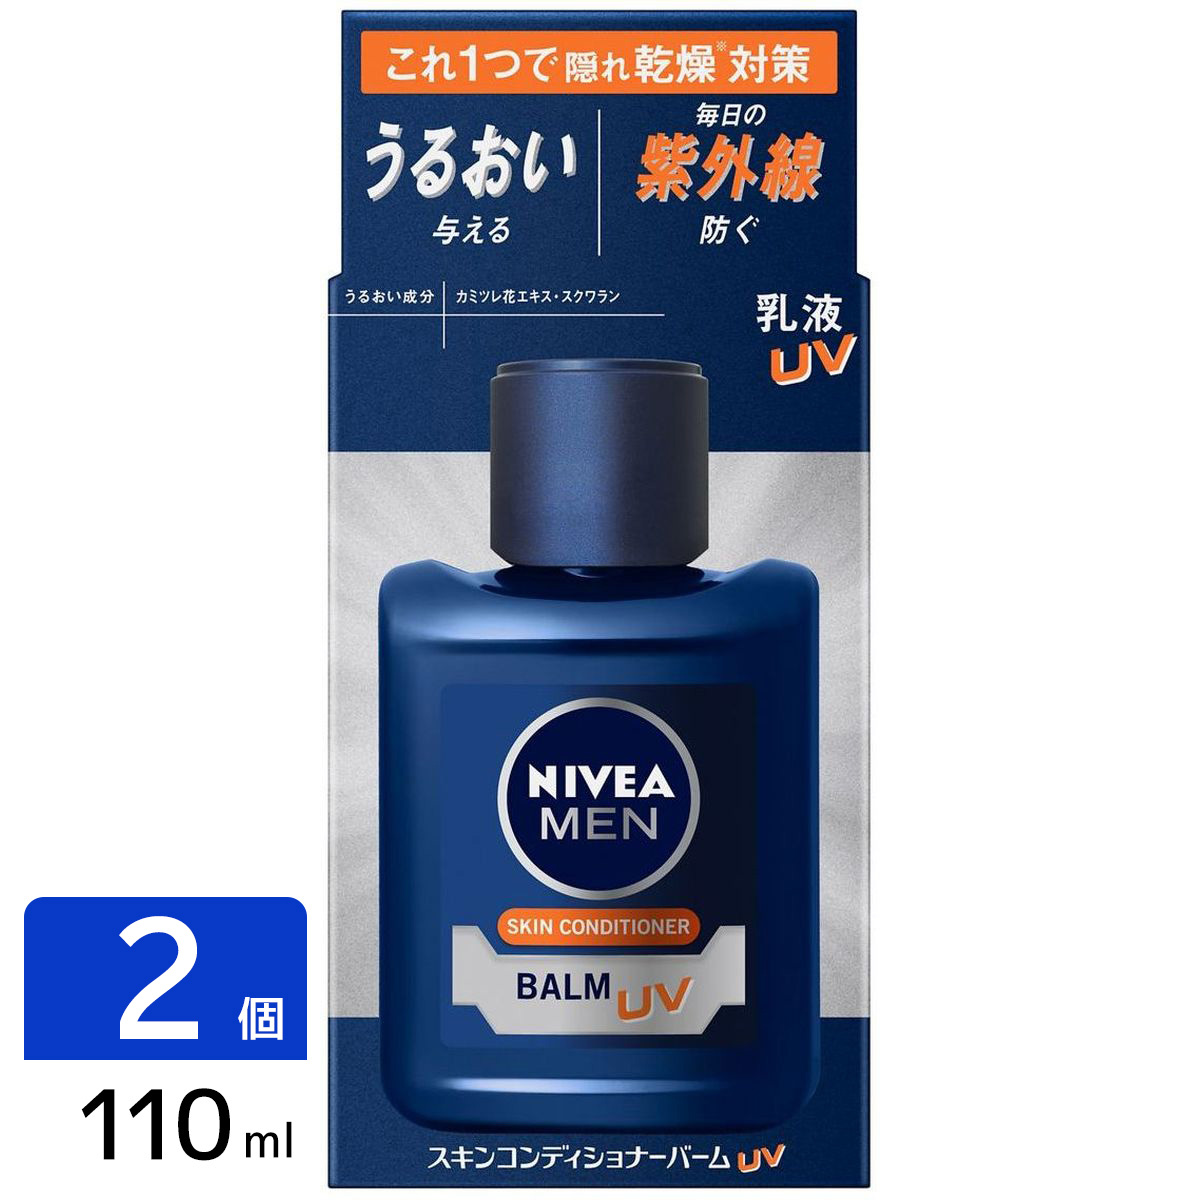 NIVEA 花王 ニベアメン スキンコンディショナーバームUV 110ml × 2個 NIVEA MEN 男性用化粧品乳液の商品画像